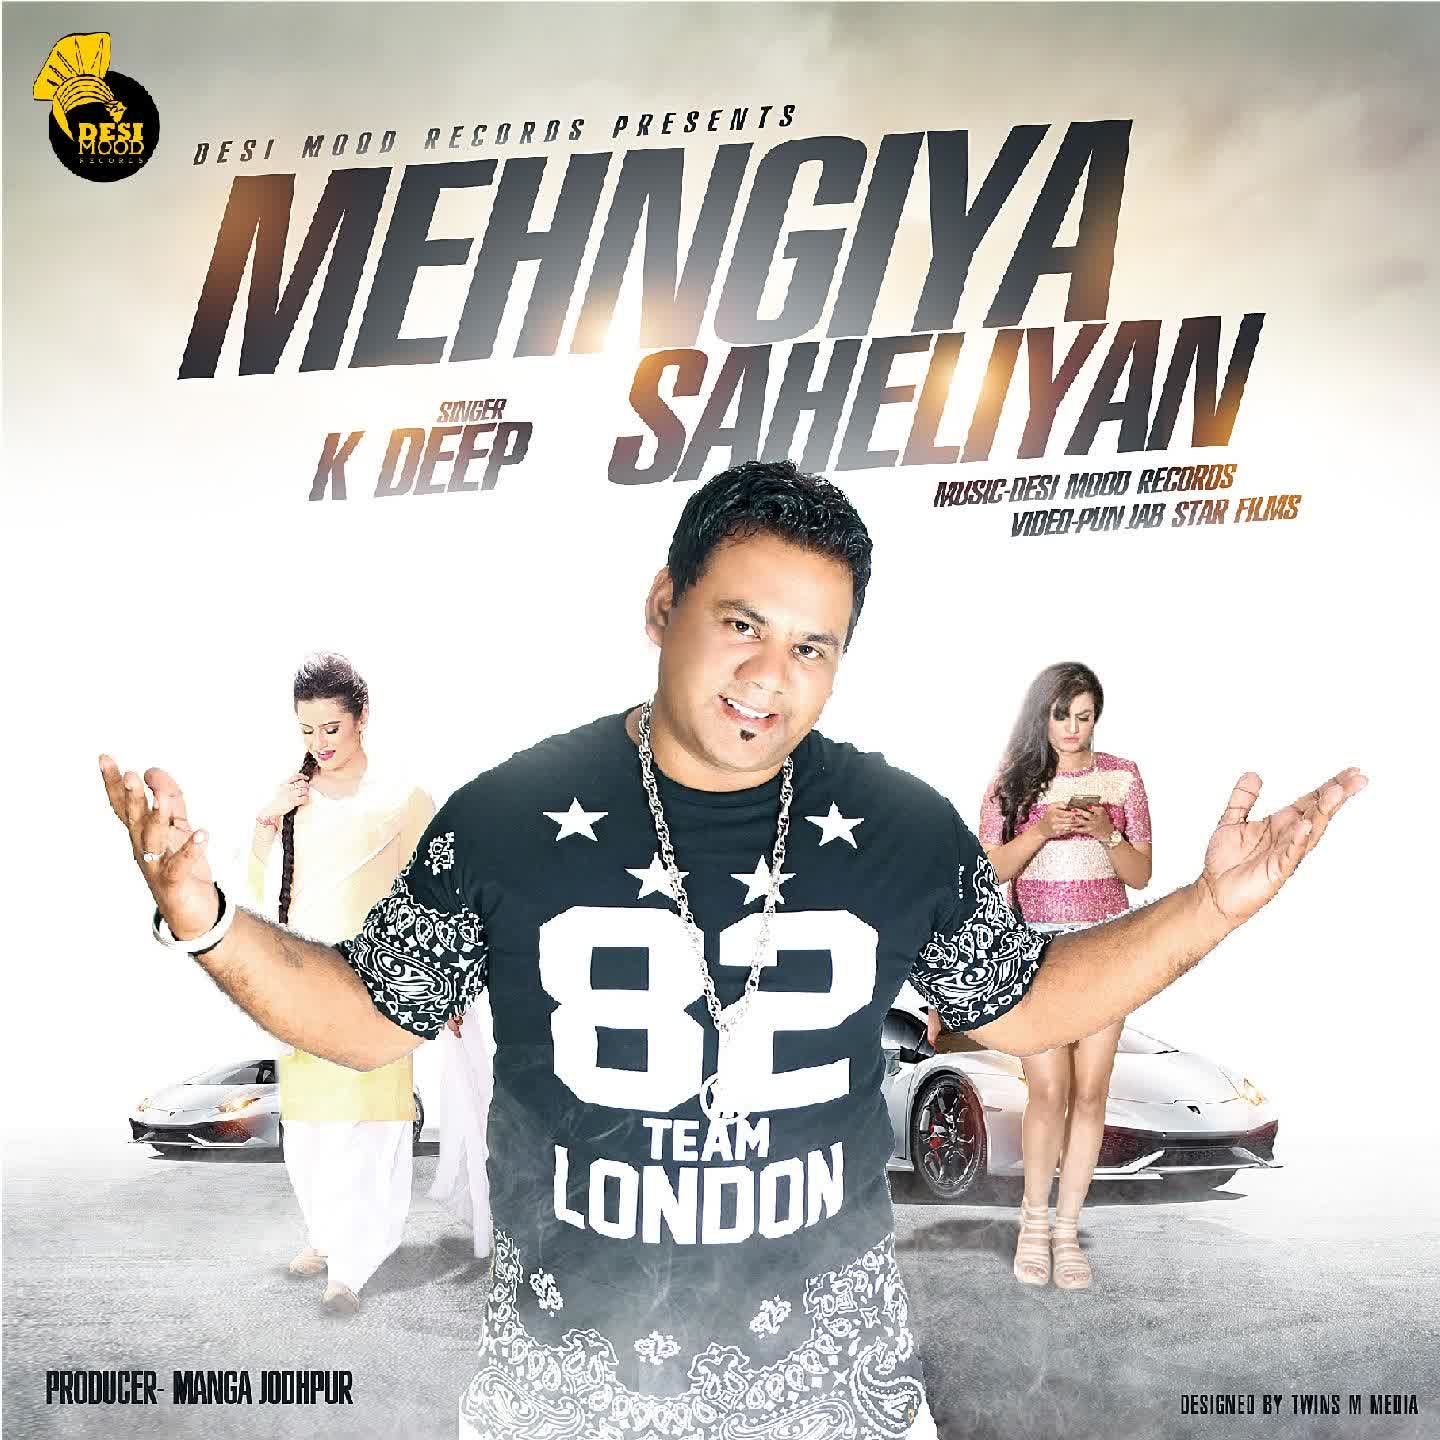 Ehngiya Saheliyan K Deep Mp3 song download